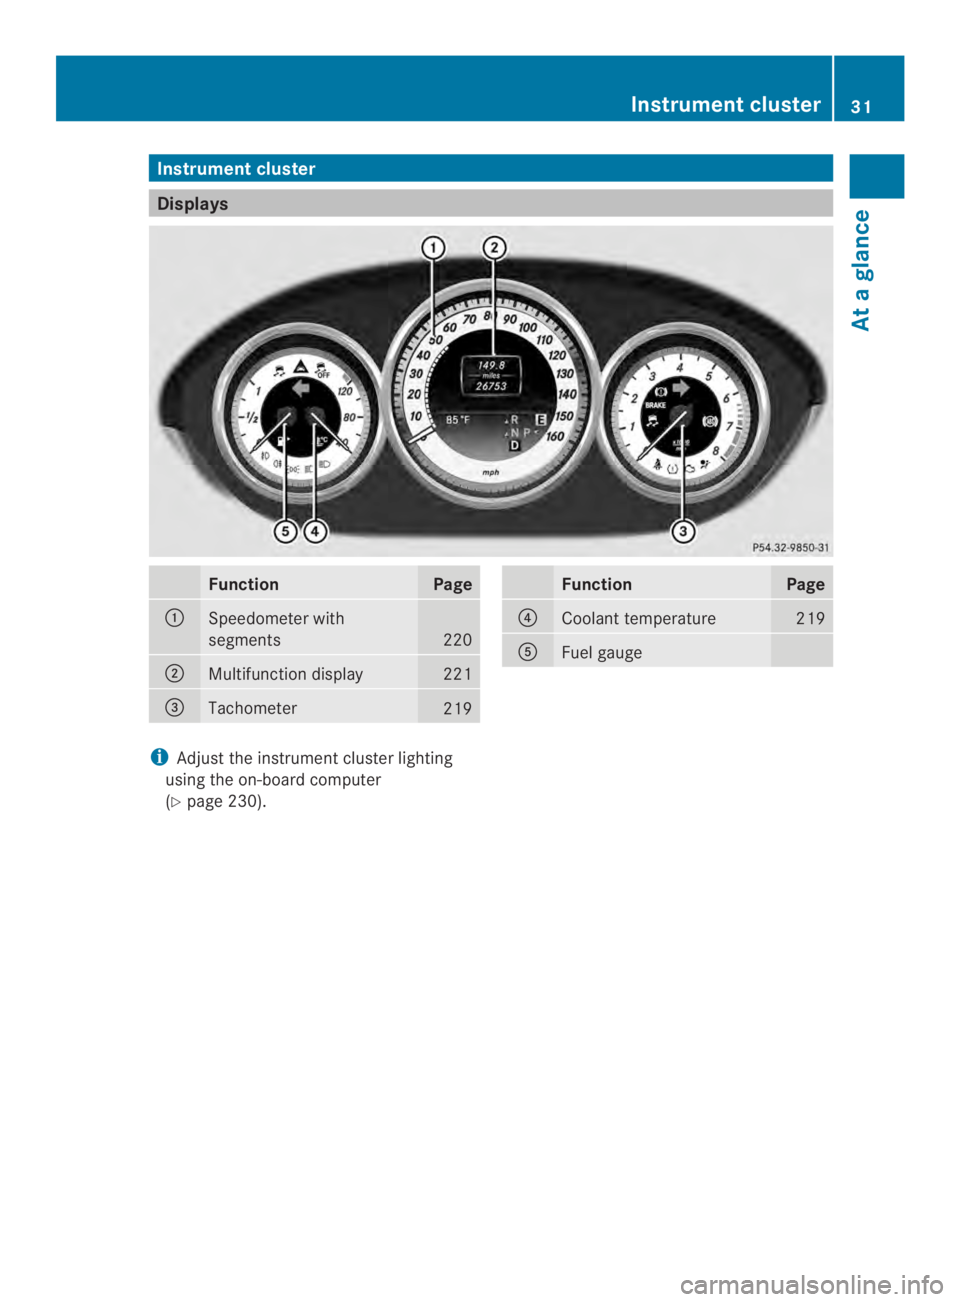 MERCEDES-BENZ CLS 2014  Owners Manual Instrumentcluster
Displays
FunctionPage
�Speedometer with
segments220
�Multifunction display221
�$Tachometer219
FunctionPage
�!Coolant temperature219
�Fuel gauge
iAdjust the instrumentcluster light